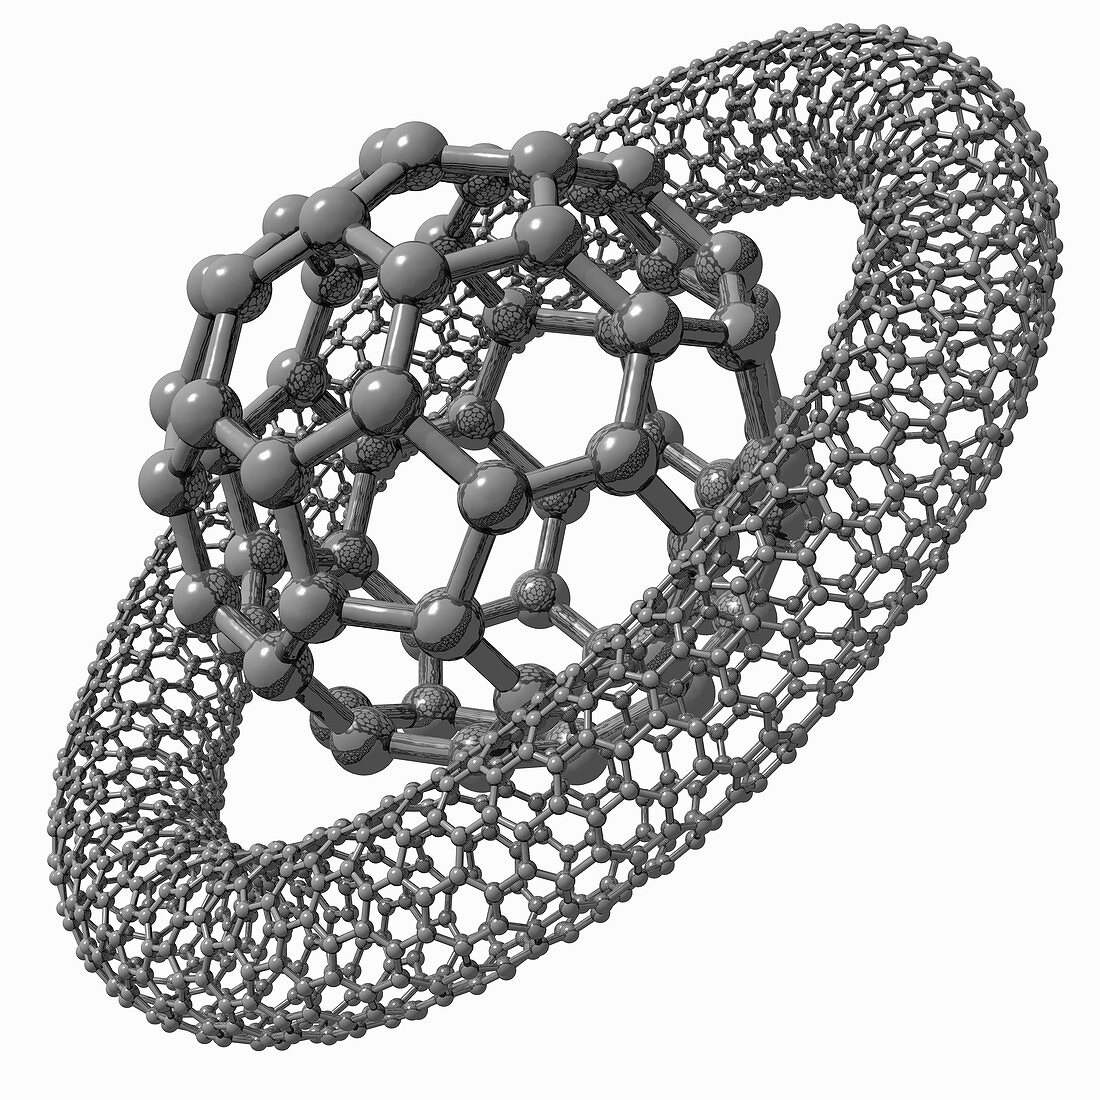 Buckyball and nanotube,artwork